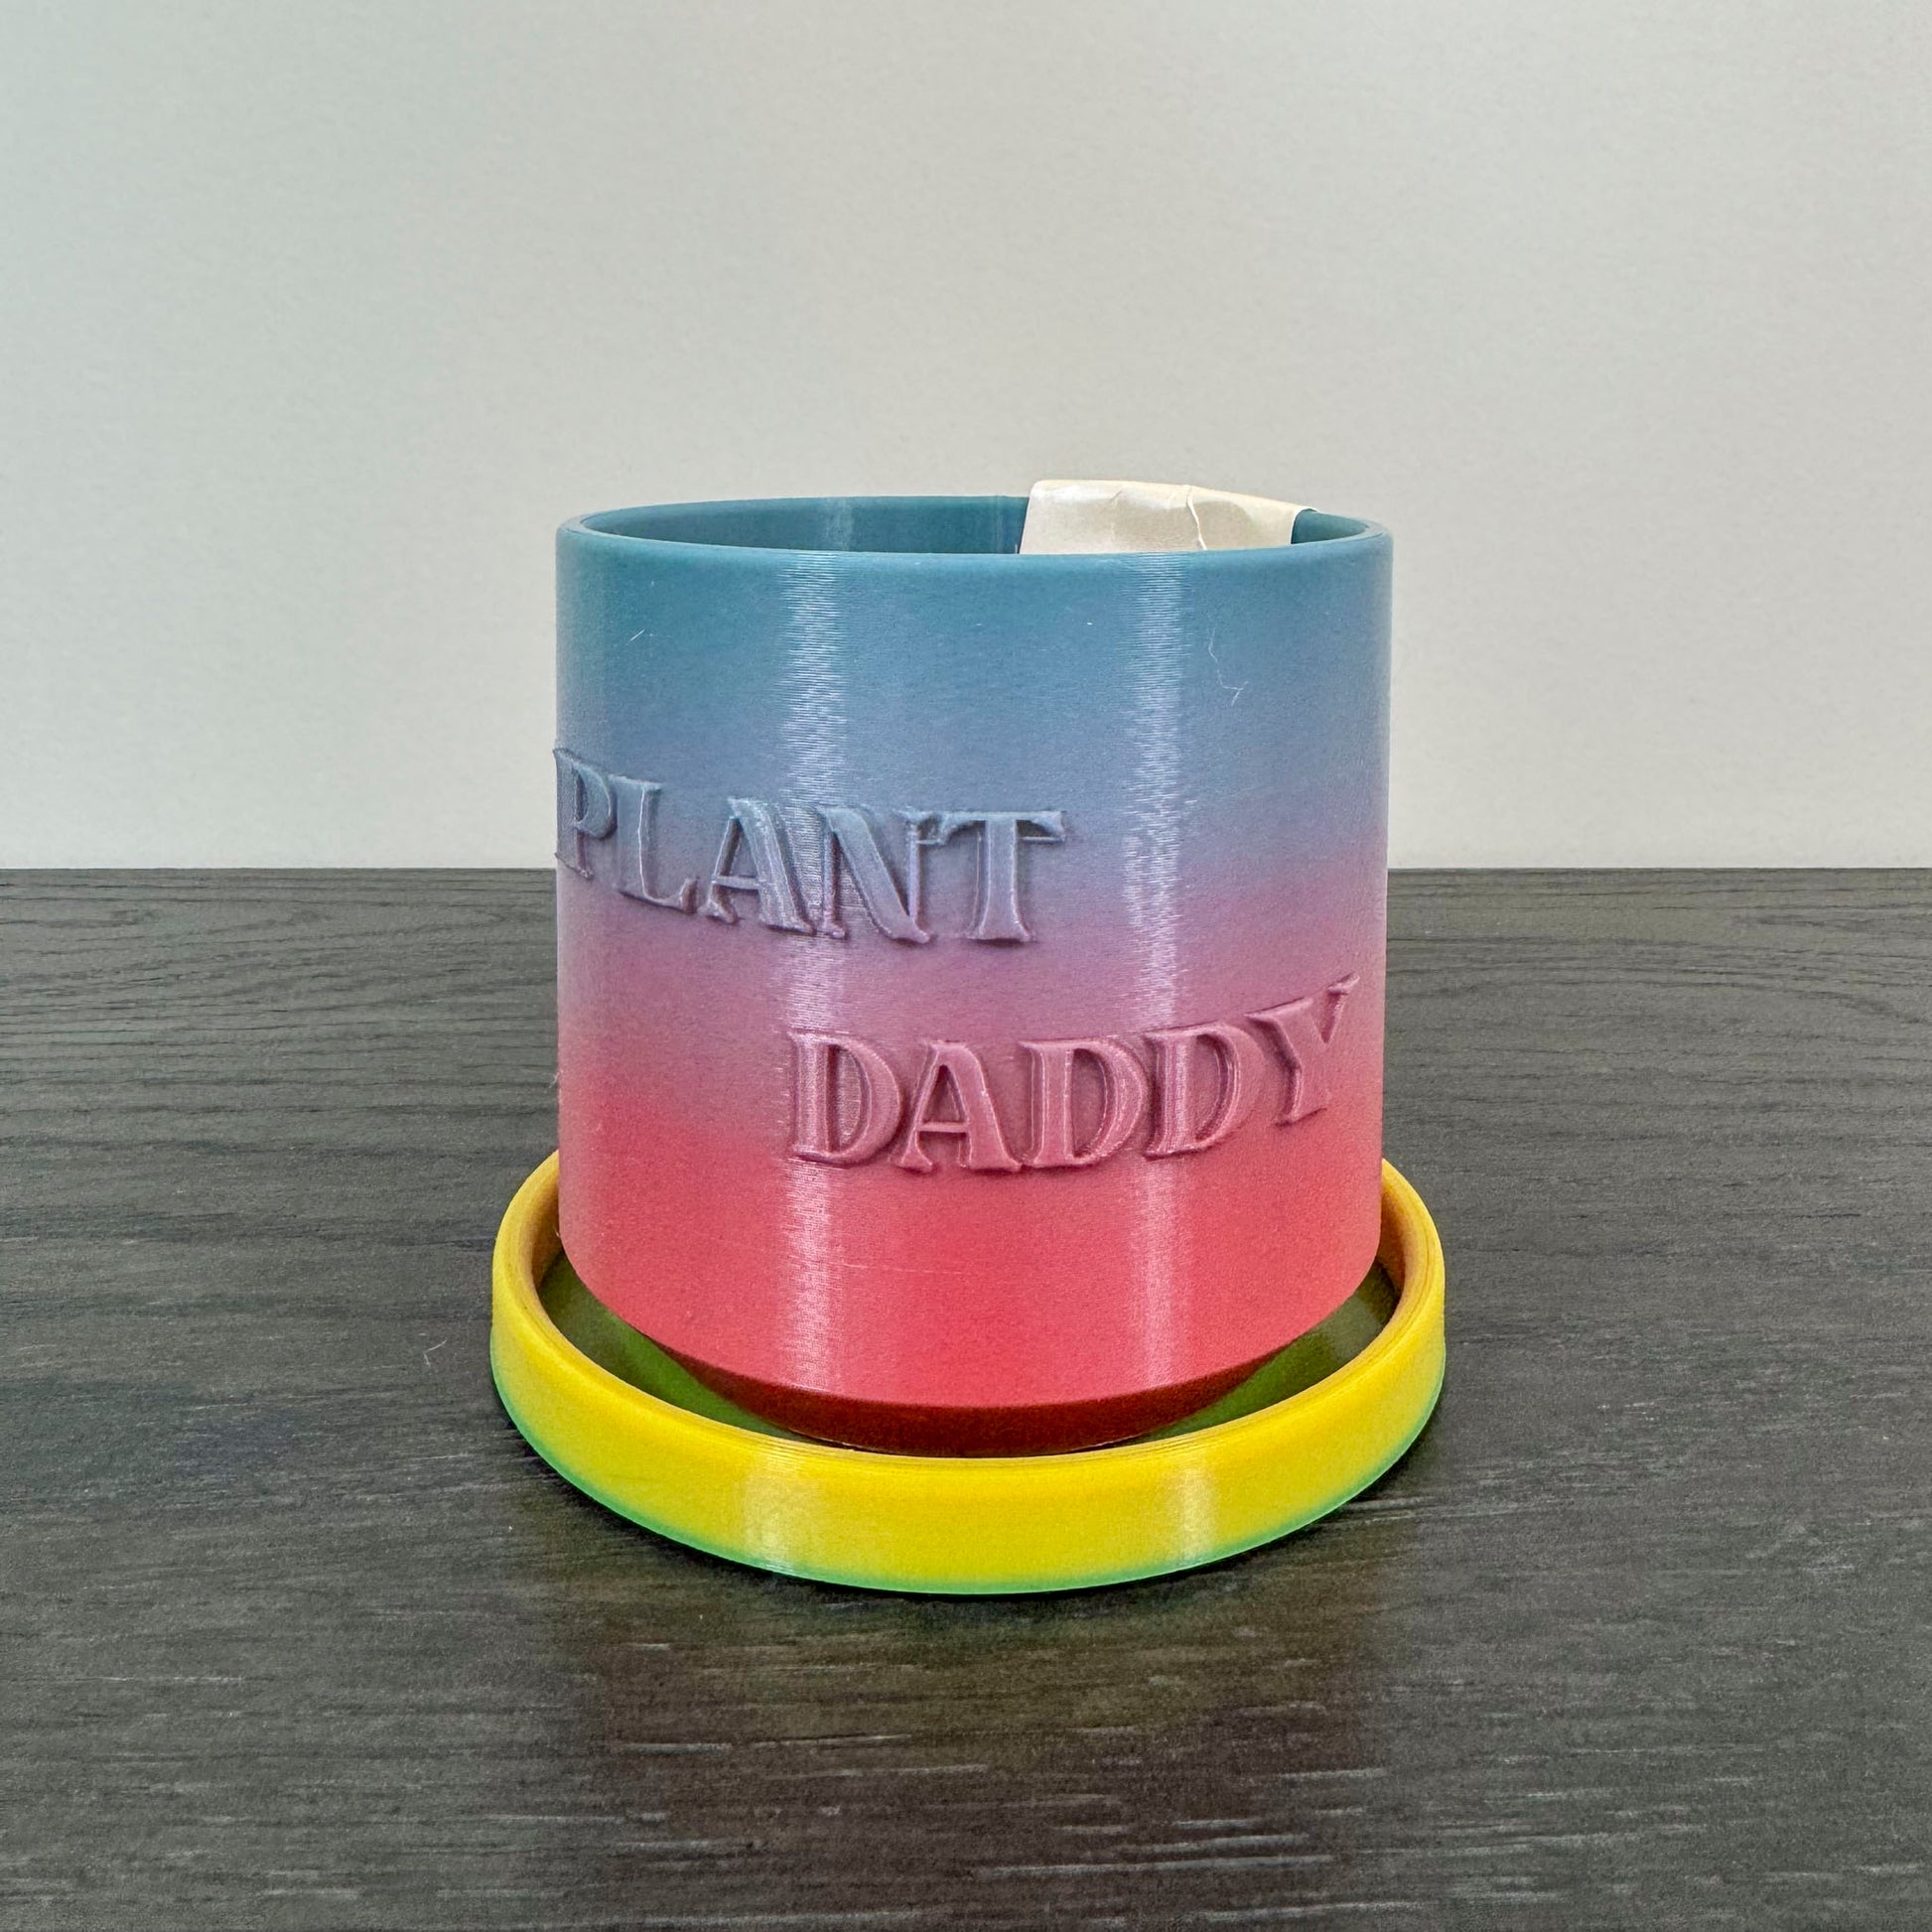 Rainbow 3D printed plant daddy planter